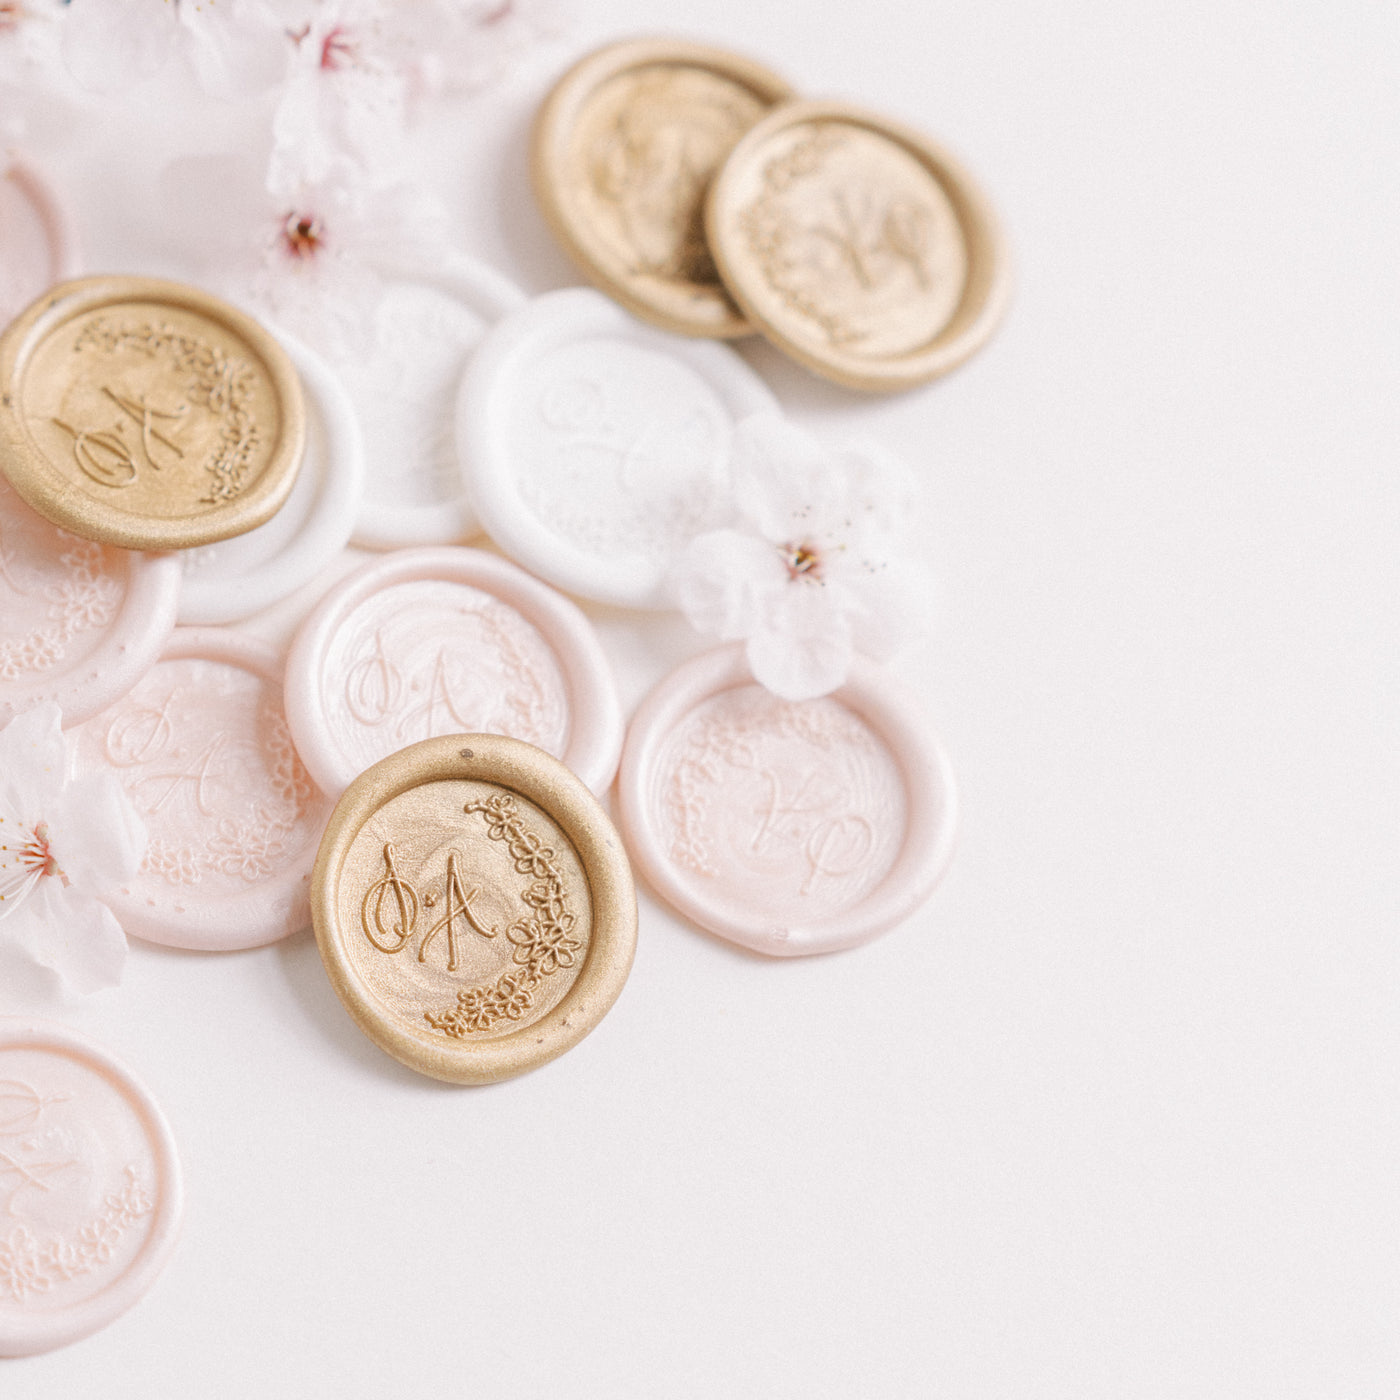 Emika Cherry Blossom Monogram Design | Self-Adhesive Wax Seals, Embosser & Rubber Stamp | 'Sakura' Cherry Blossom Rubber Stamp Embellishment for Blush Pink Spring Wedding | Heirloom Seals